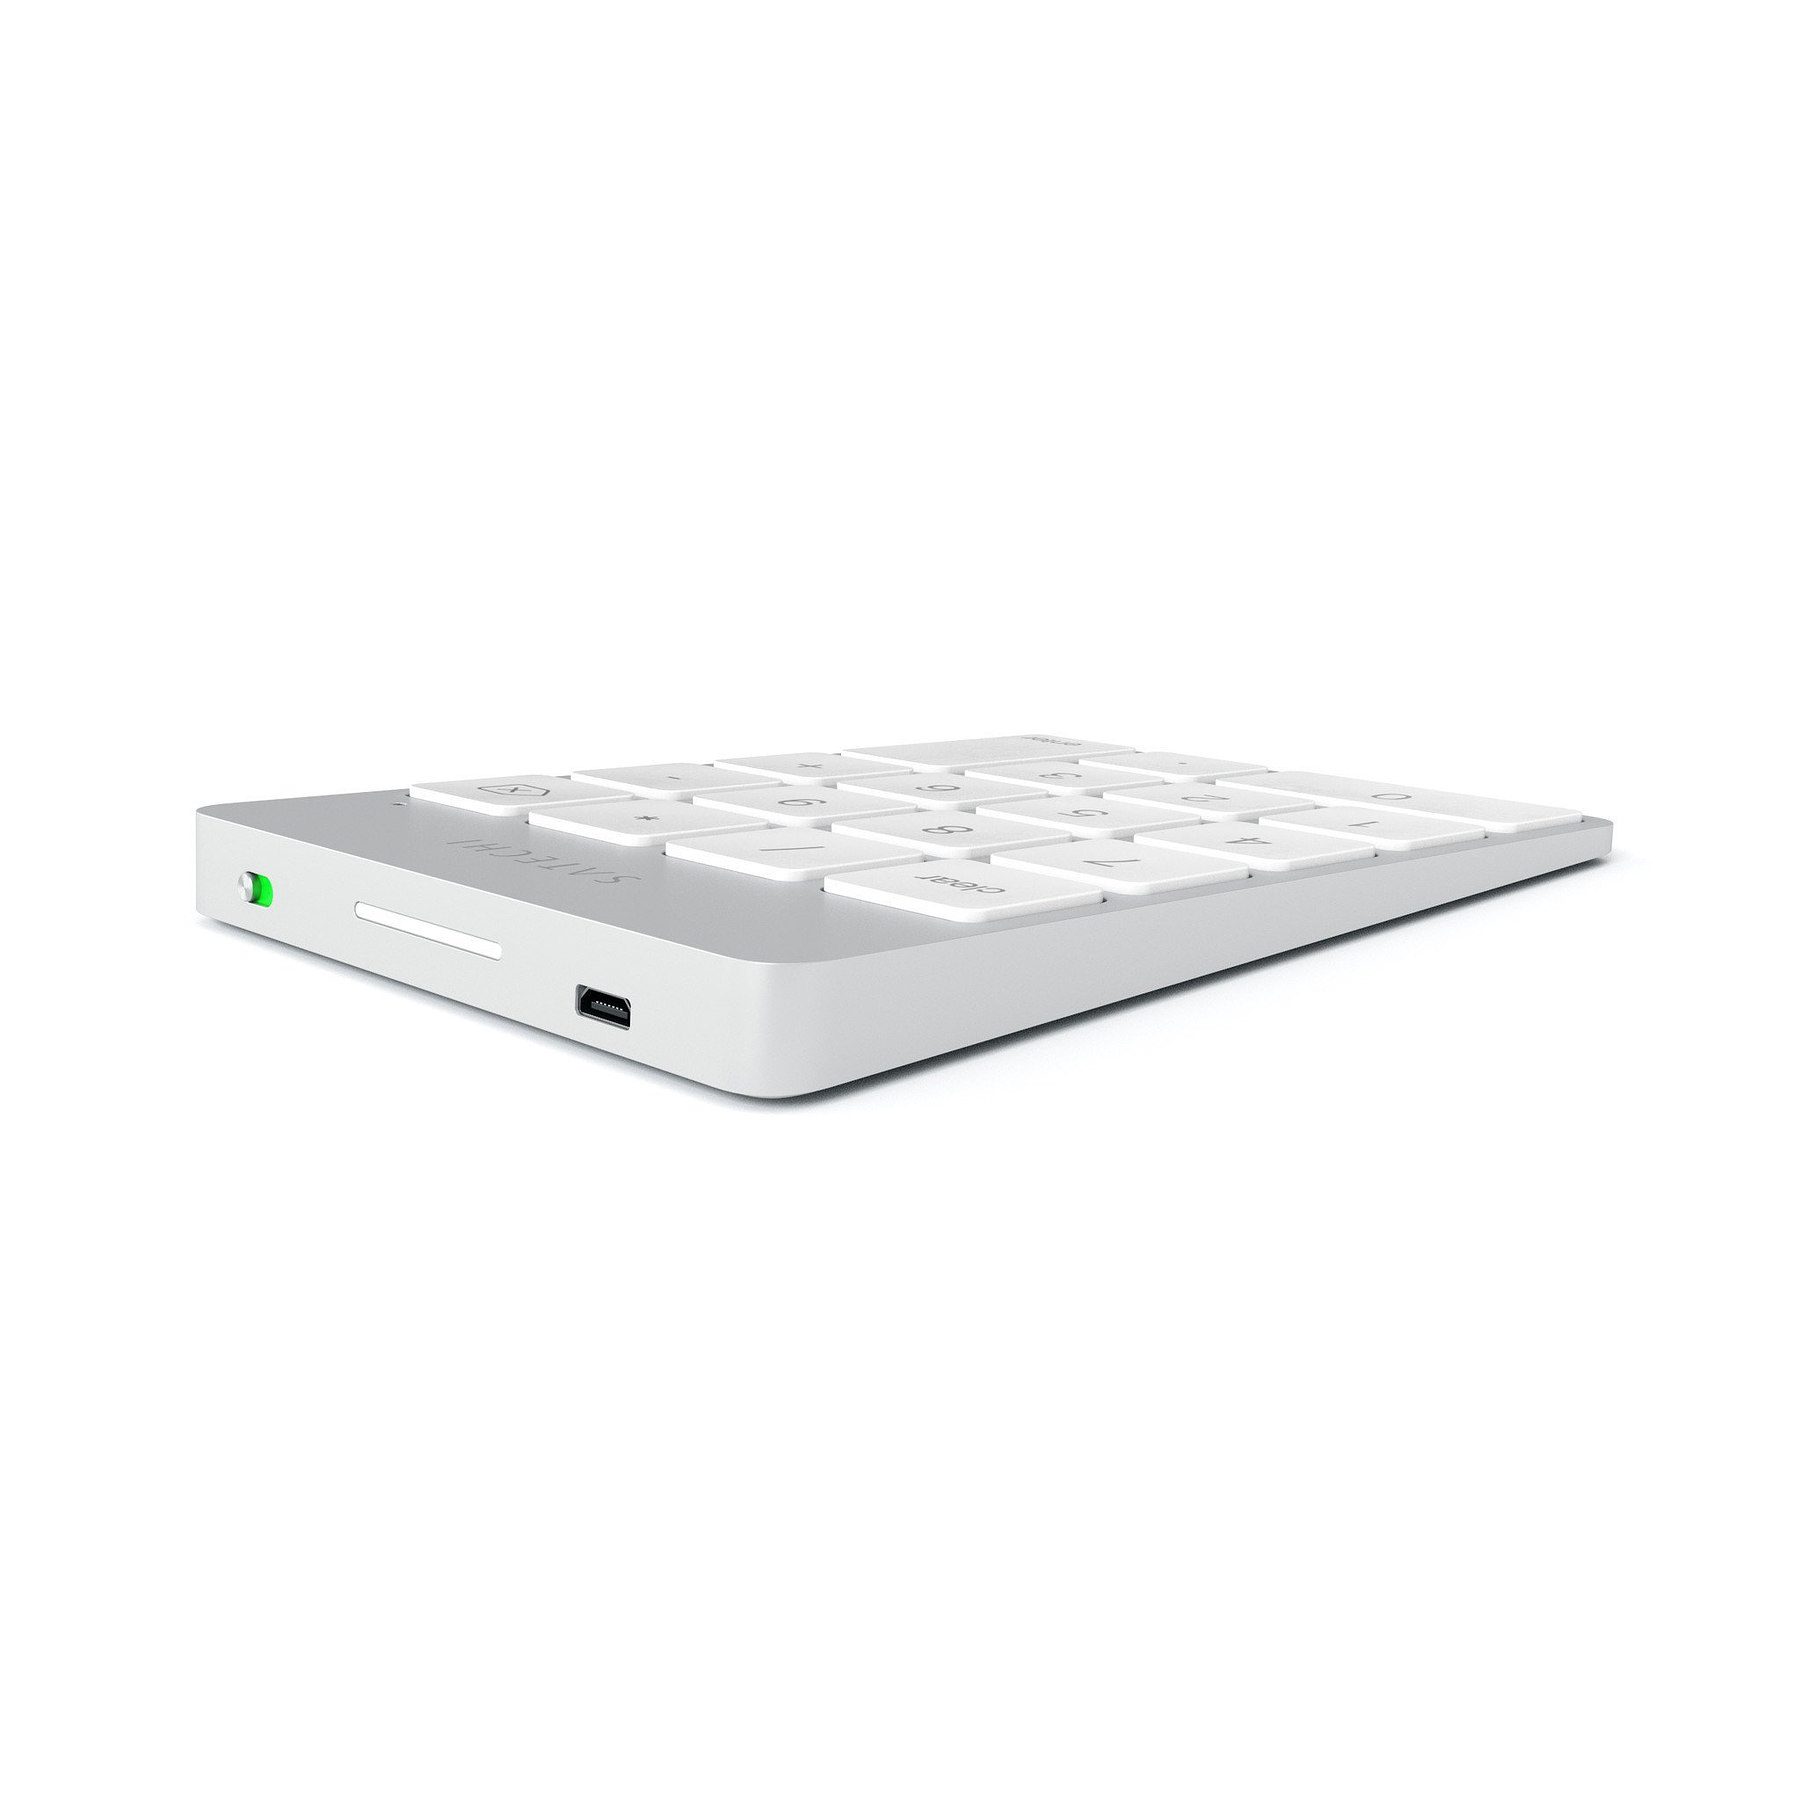 Satechi - Wireless Keypad (silver)